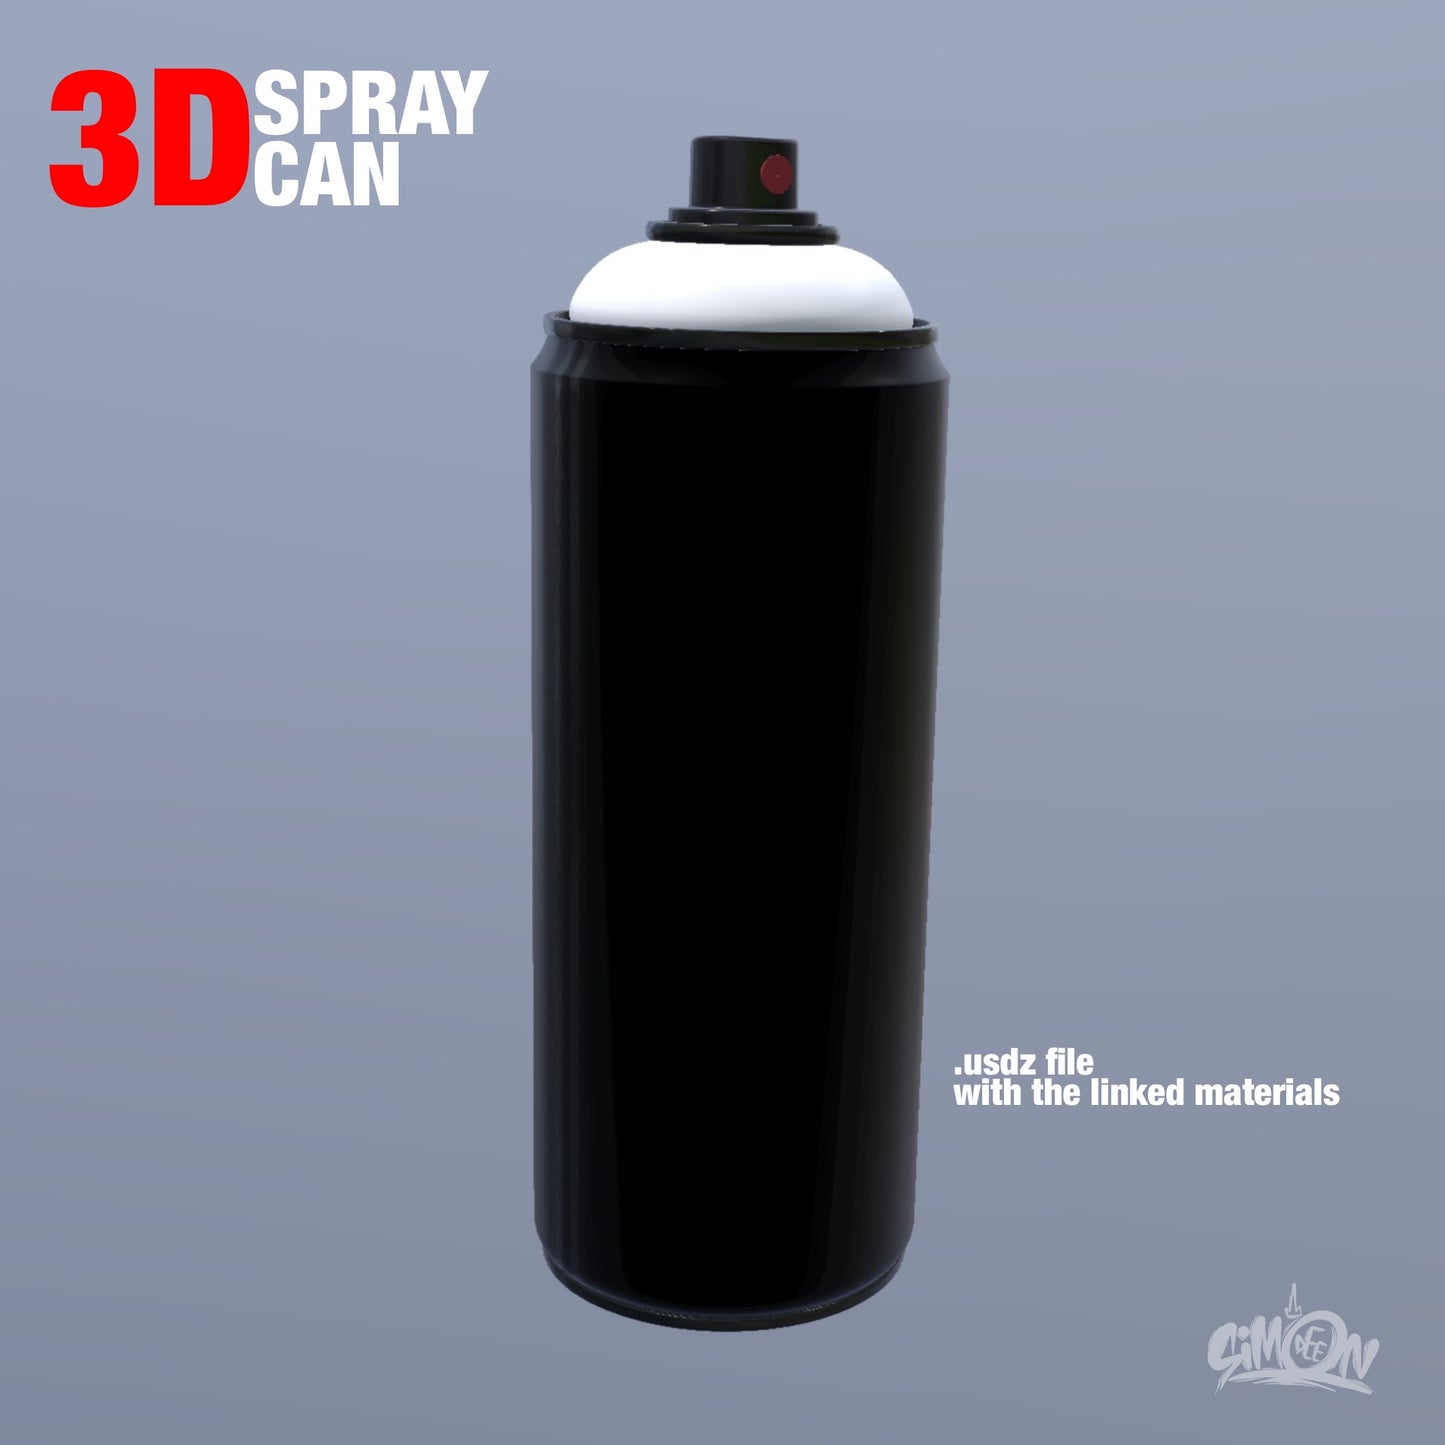 3D SprayCan